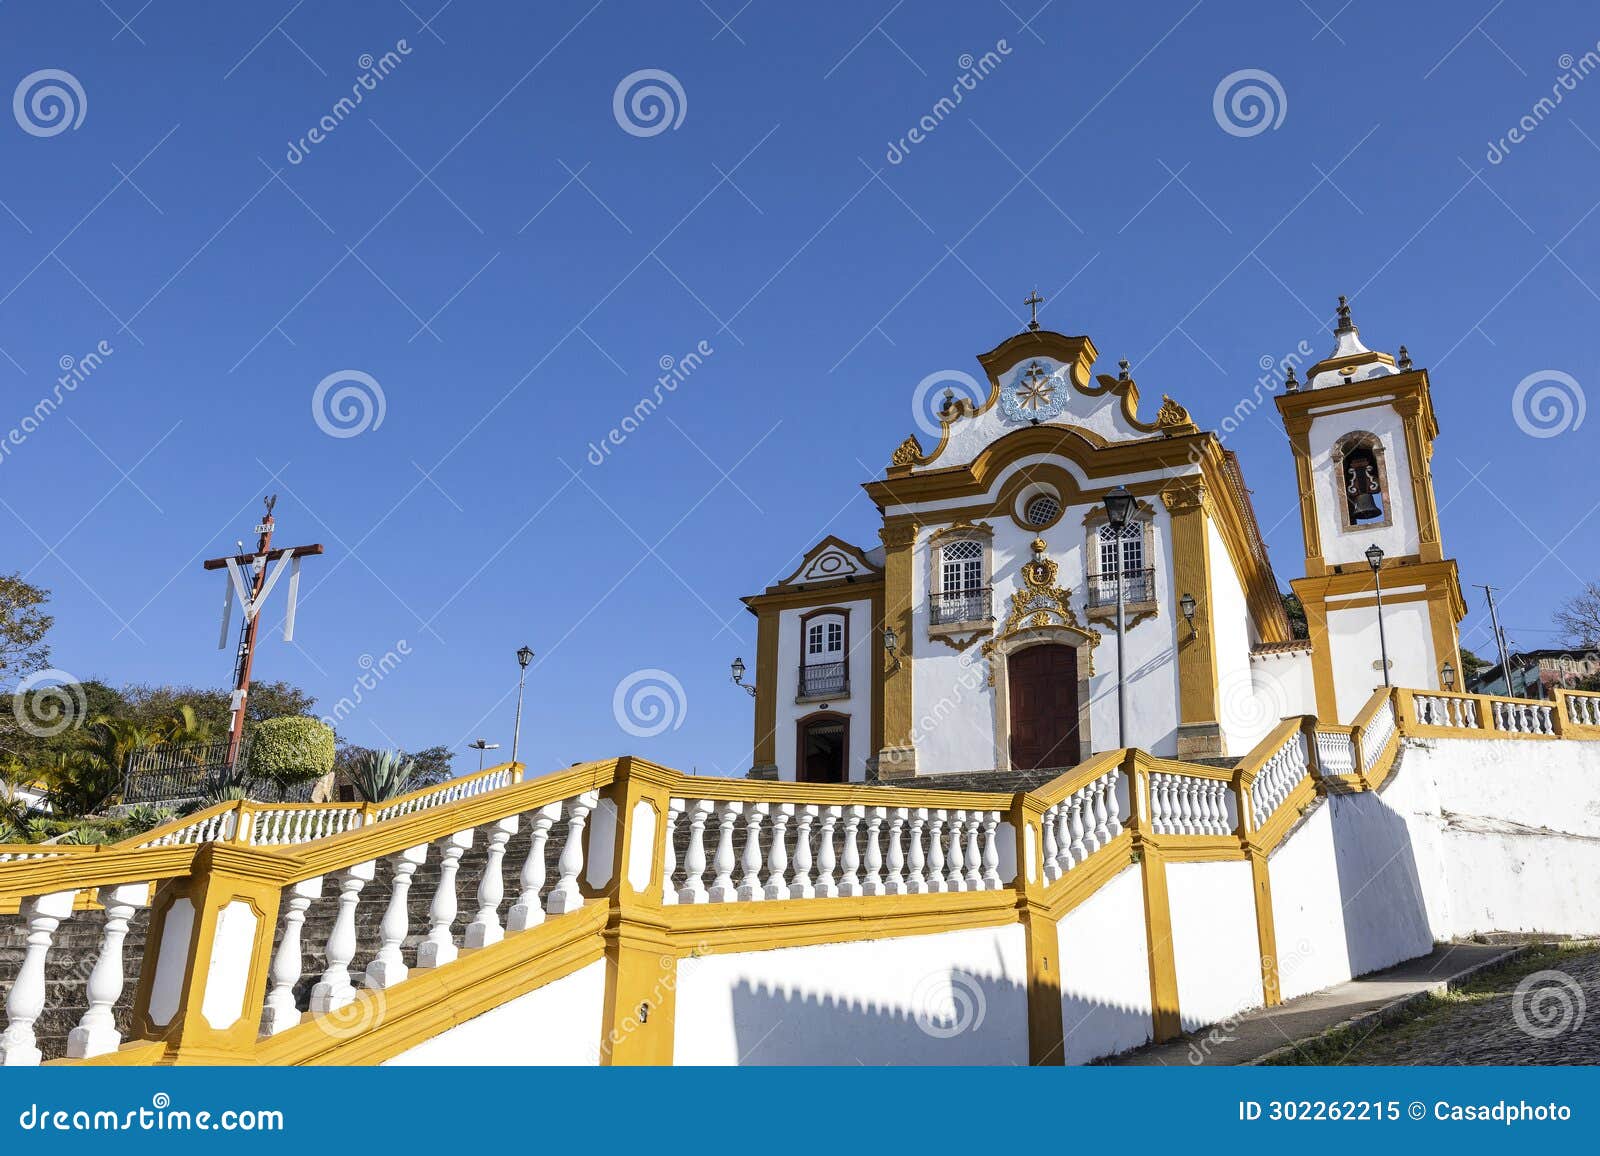 baroque church of nossa senhora das merces in the historic center of sao joao del rei